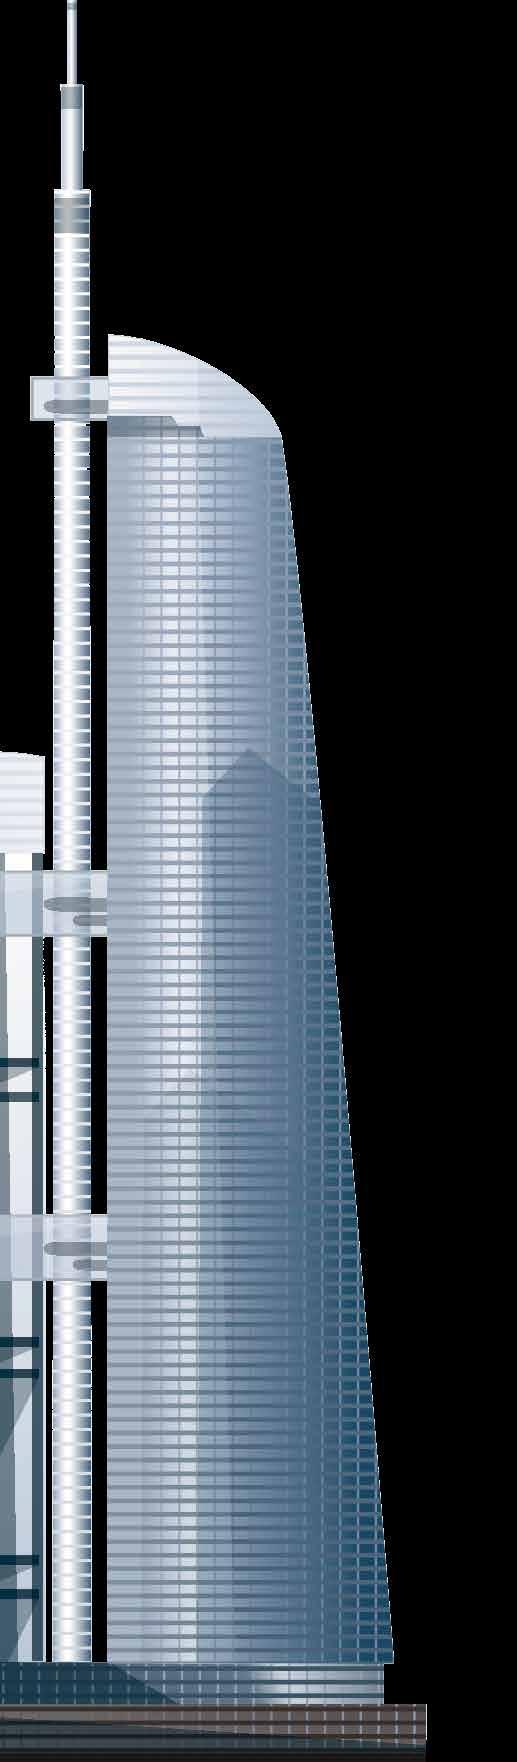 MAL 449 m Empire State Building New York. USA 448 m Federation Tower Moskau. RUS 412 m IFC Hongkong.